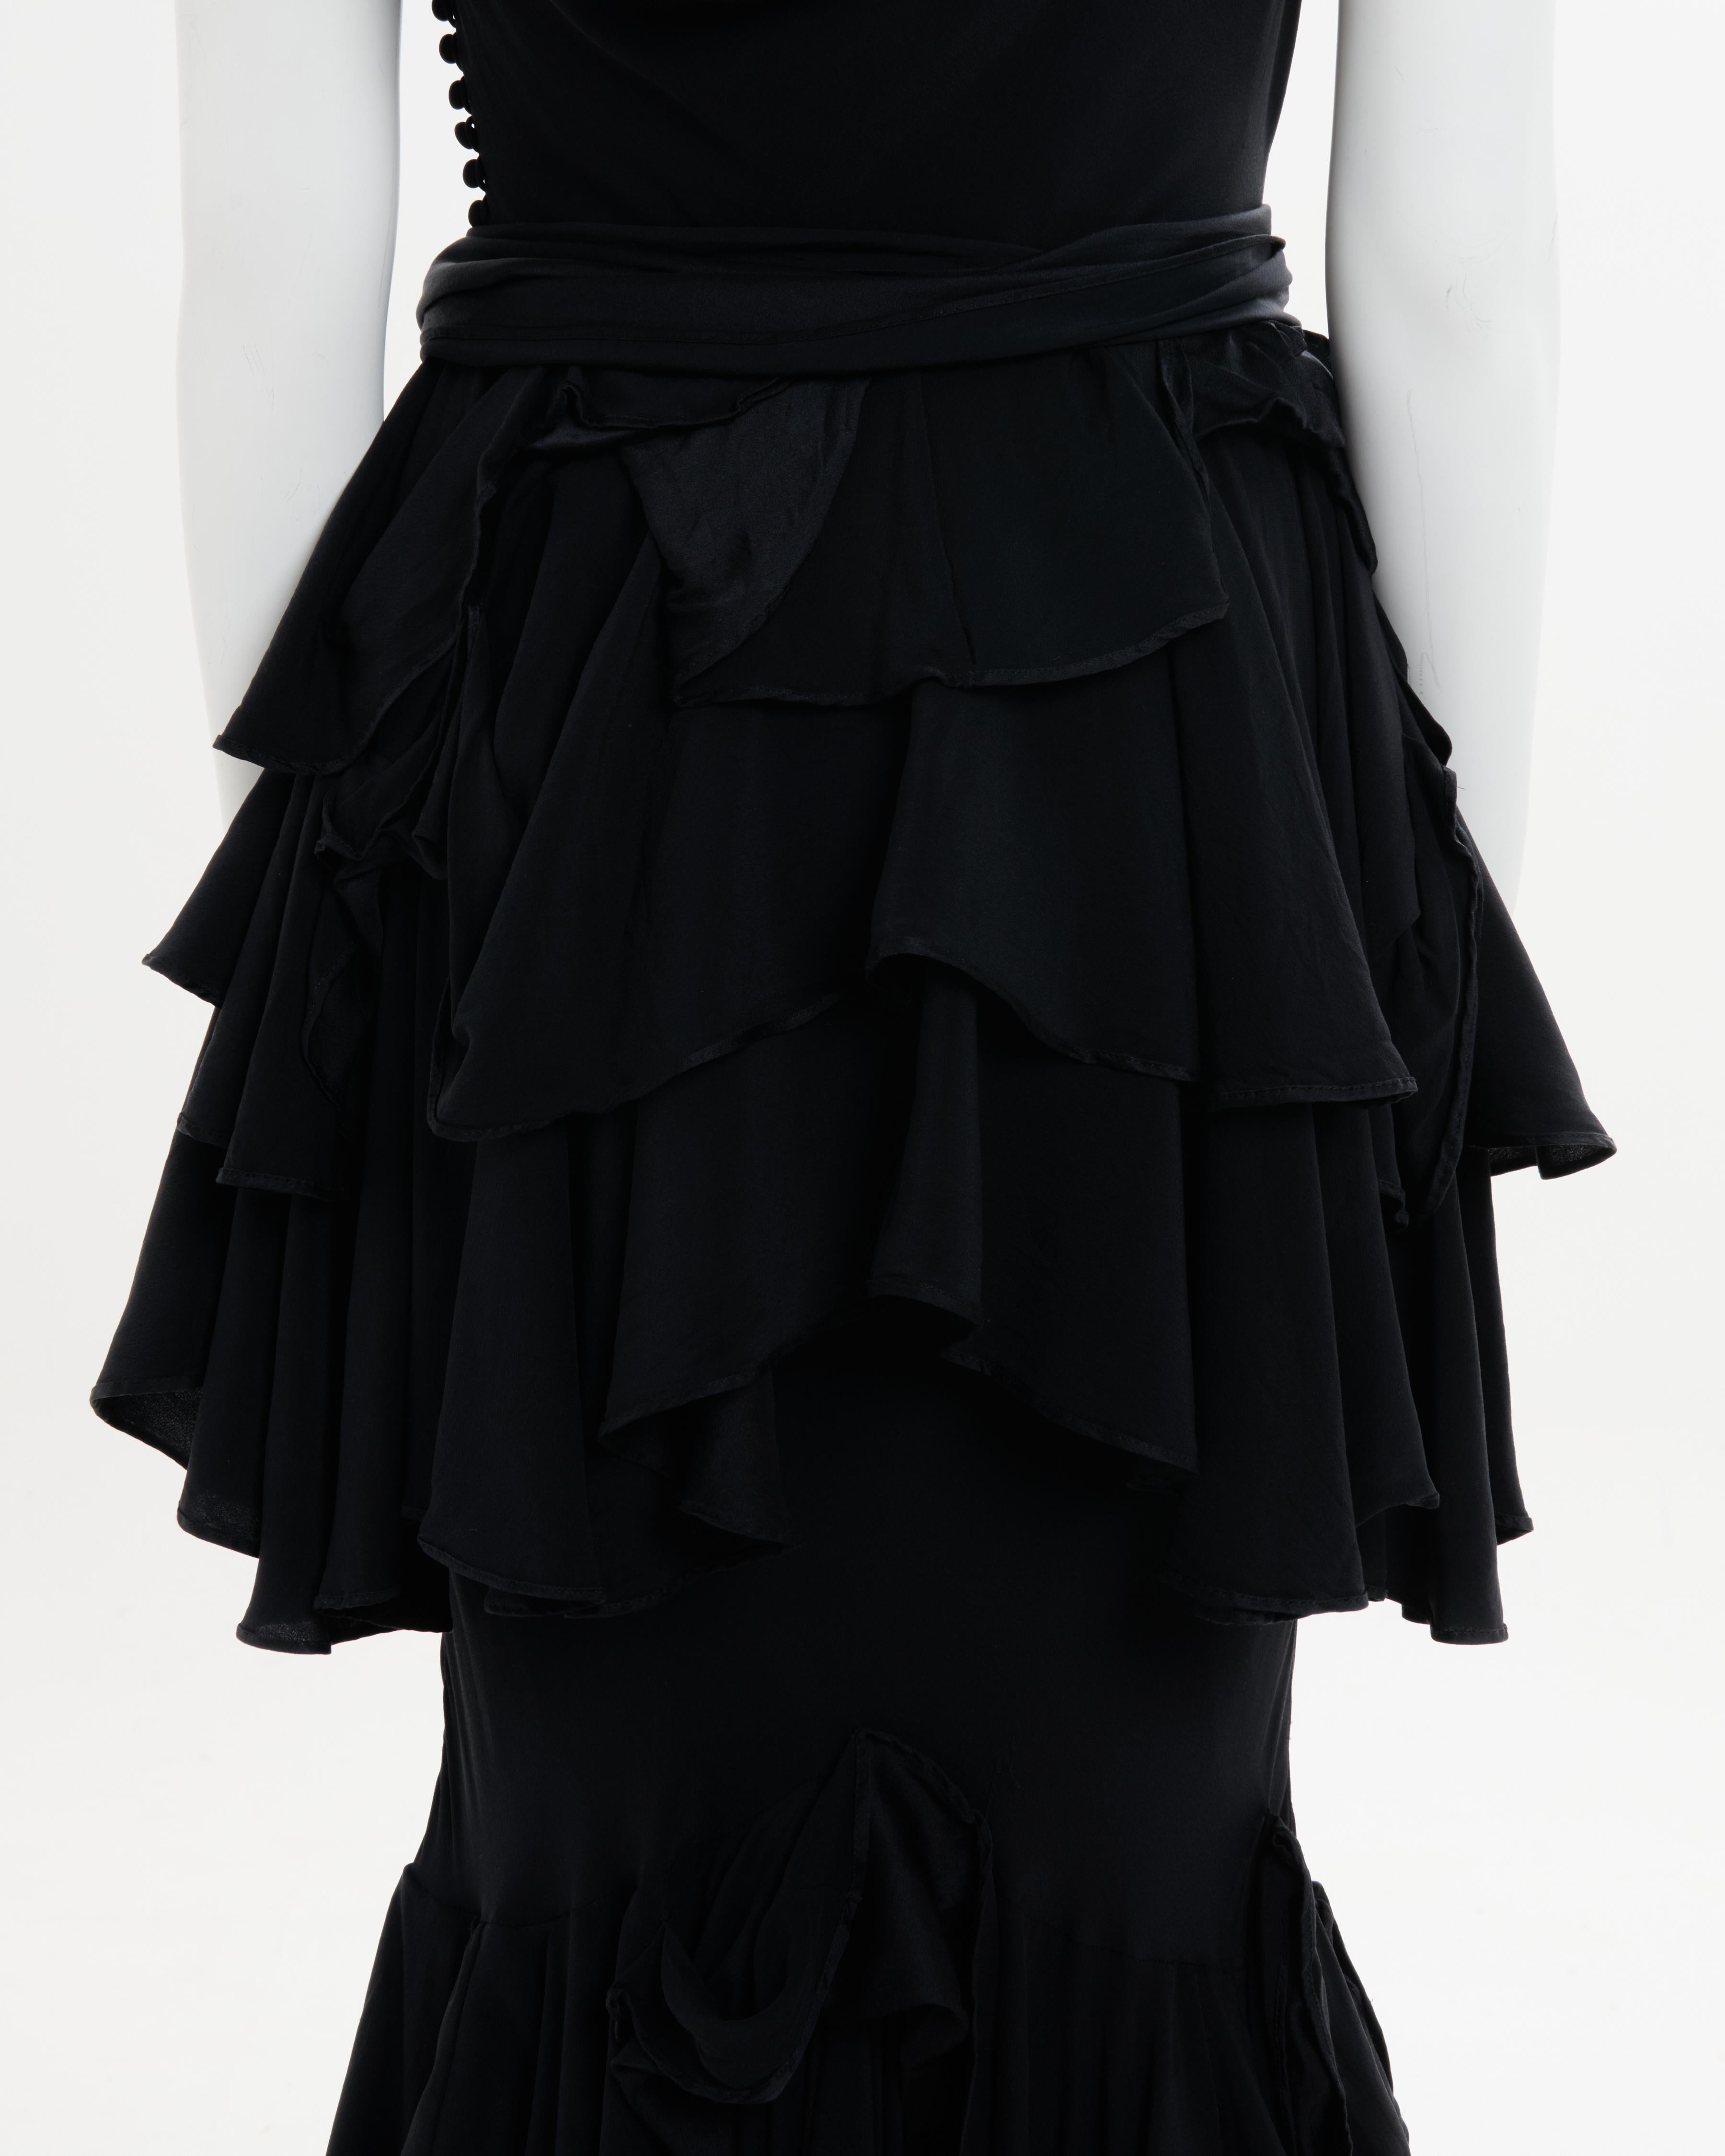 Christian Dior by John Galliano F/W 2006 Black silk bias-cut evening dress 11